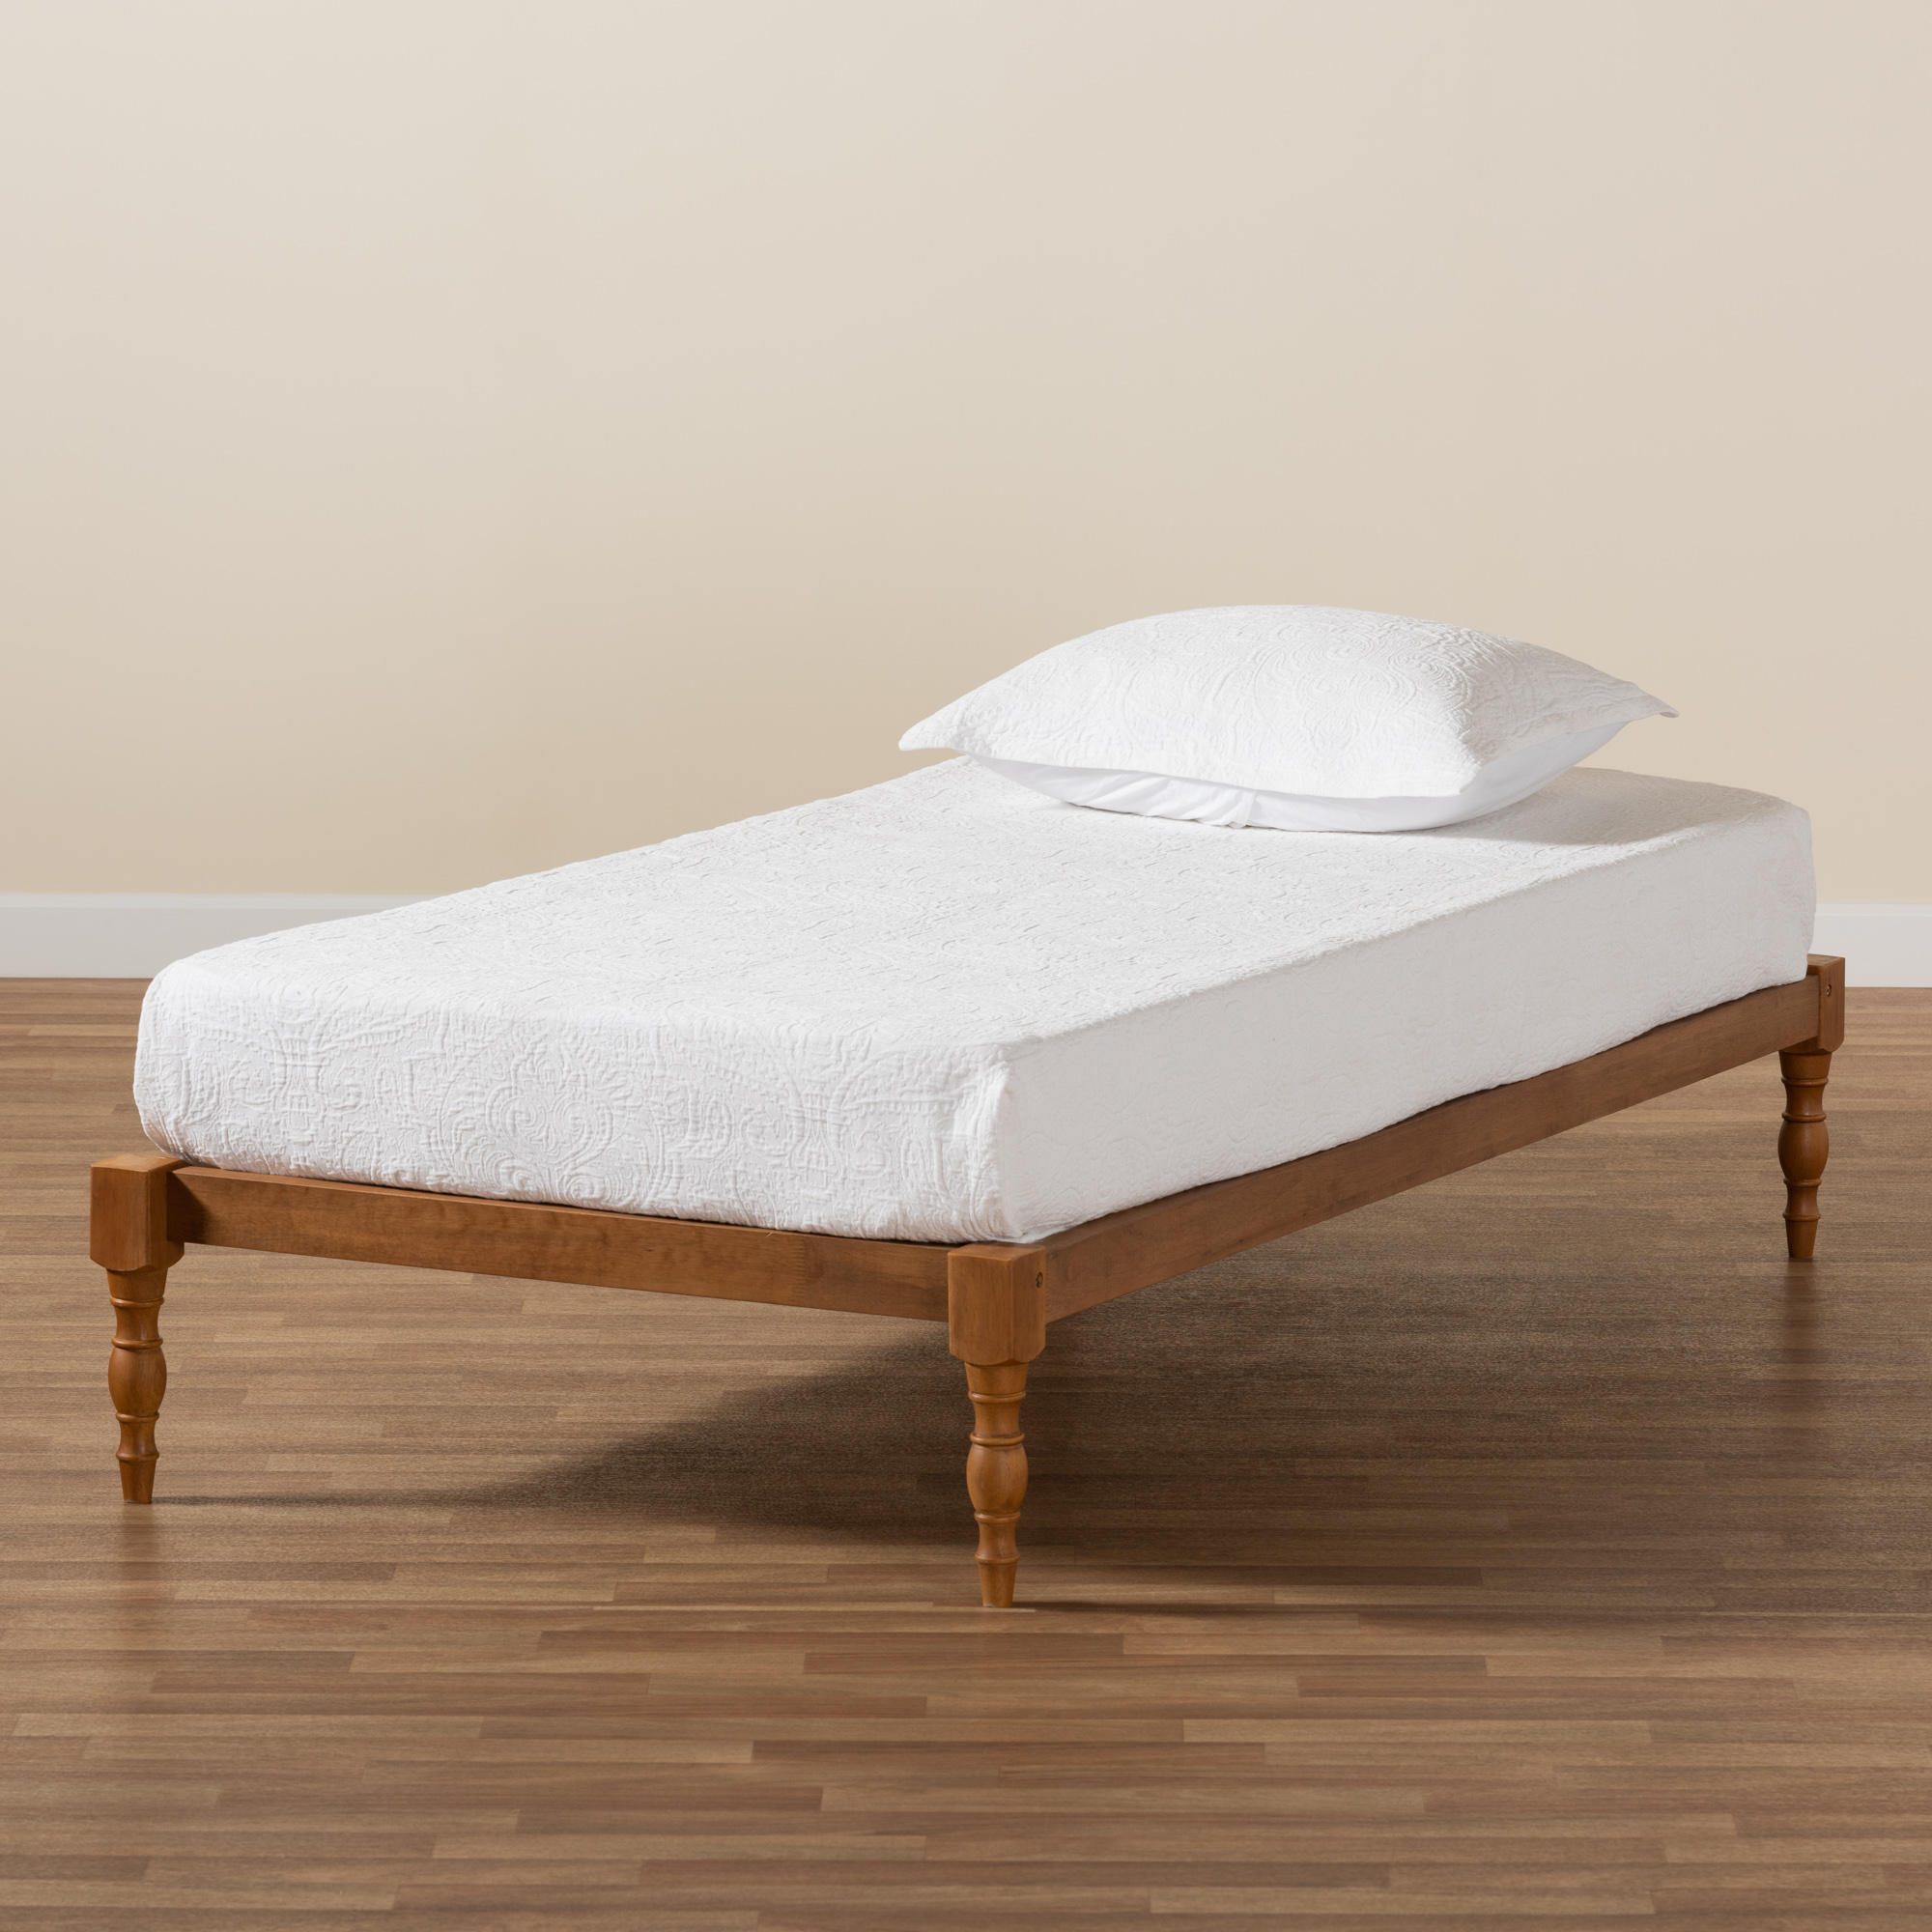 Baxton Studio Iseline Wood Platform Bed Frame, Twin, Ash Walnut - image 2 of 7